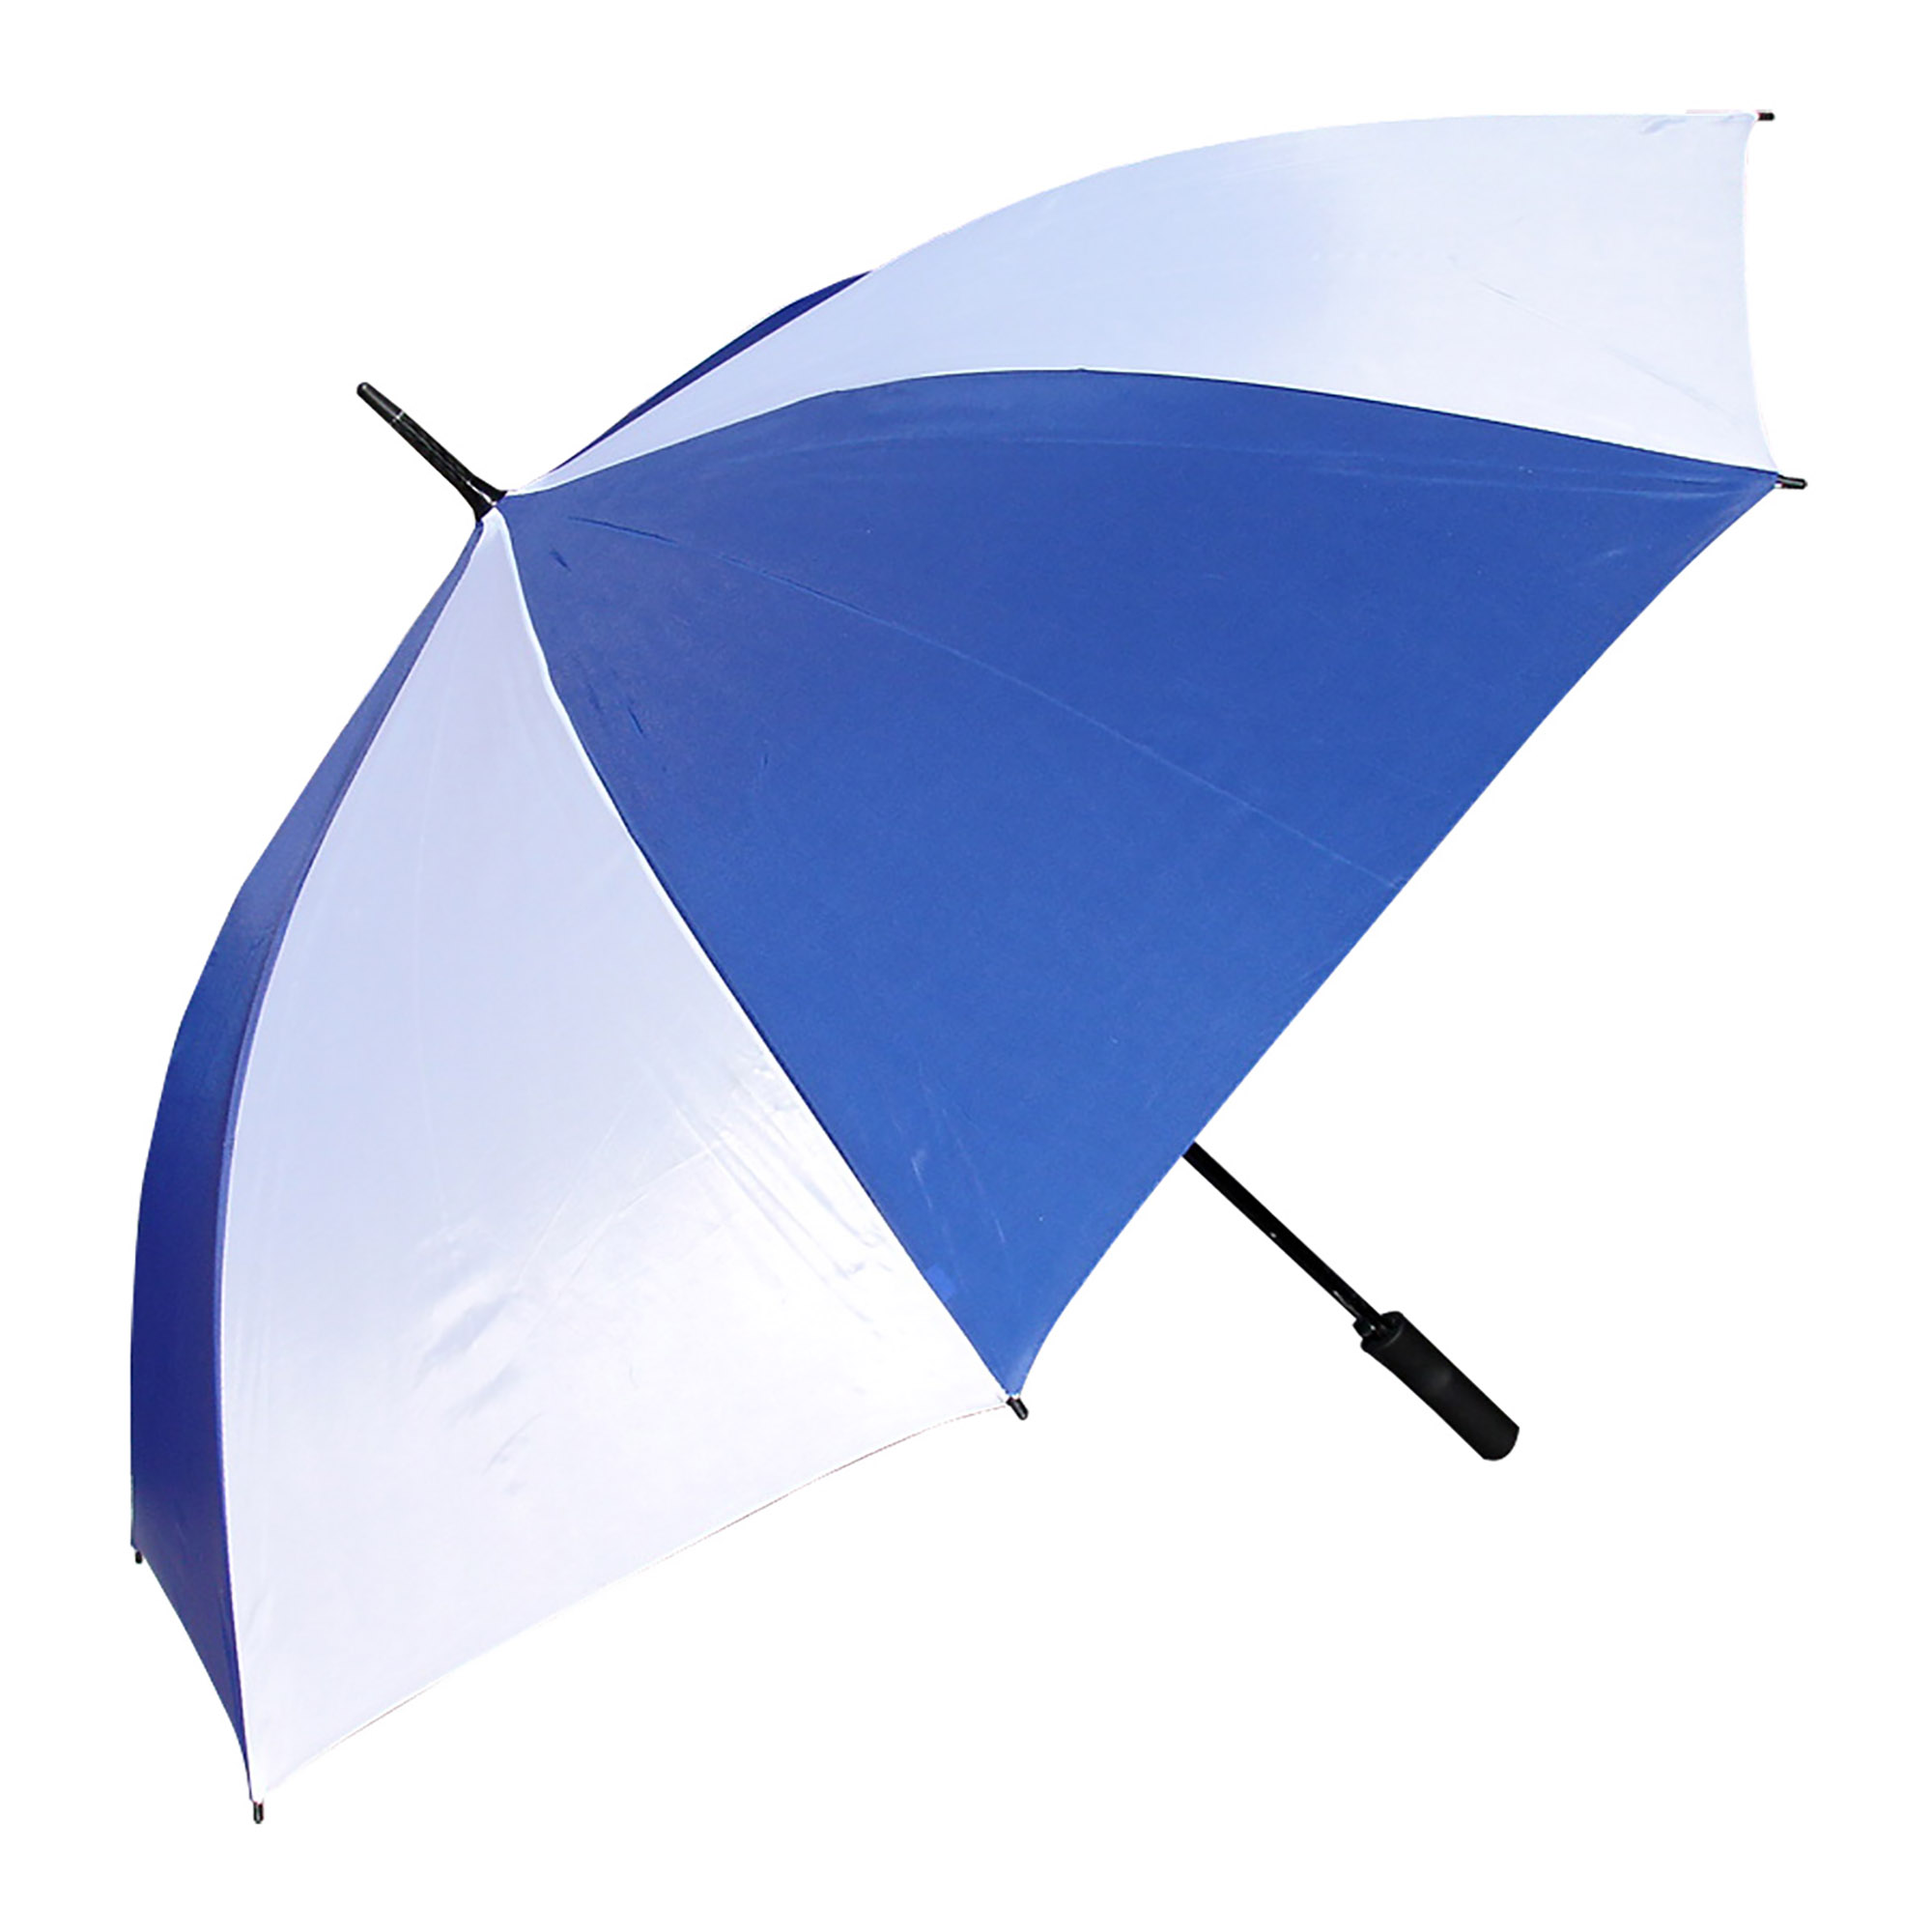 Bulk Promotional White And Blue Sands Umbrella Online In Perth Australia